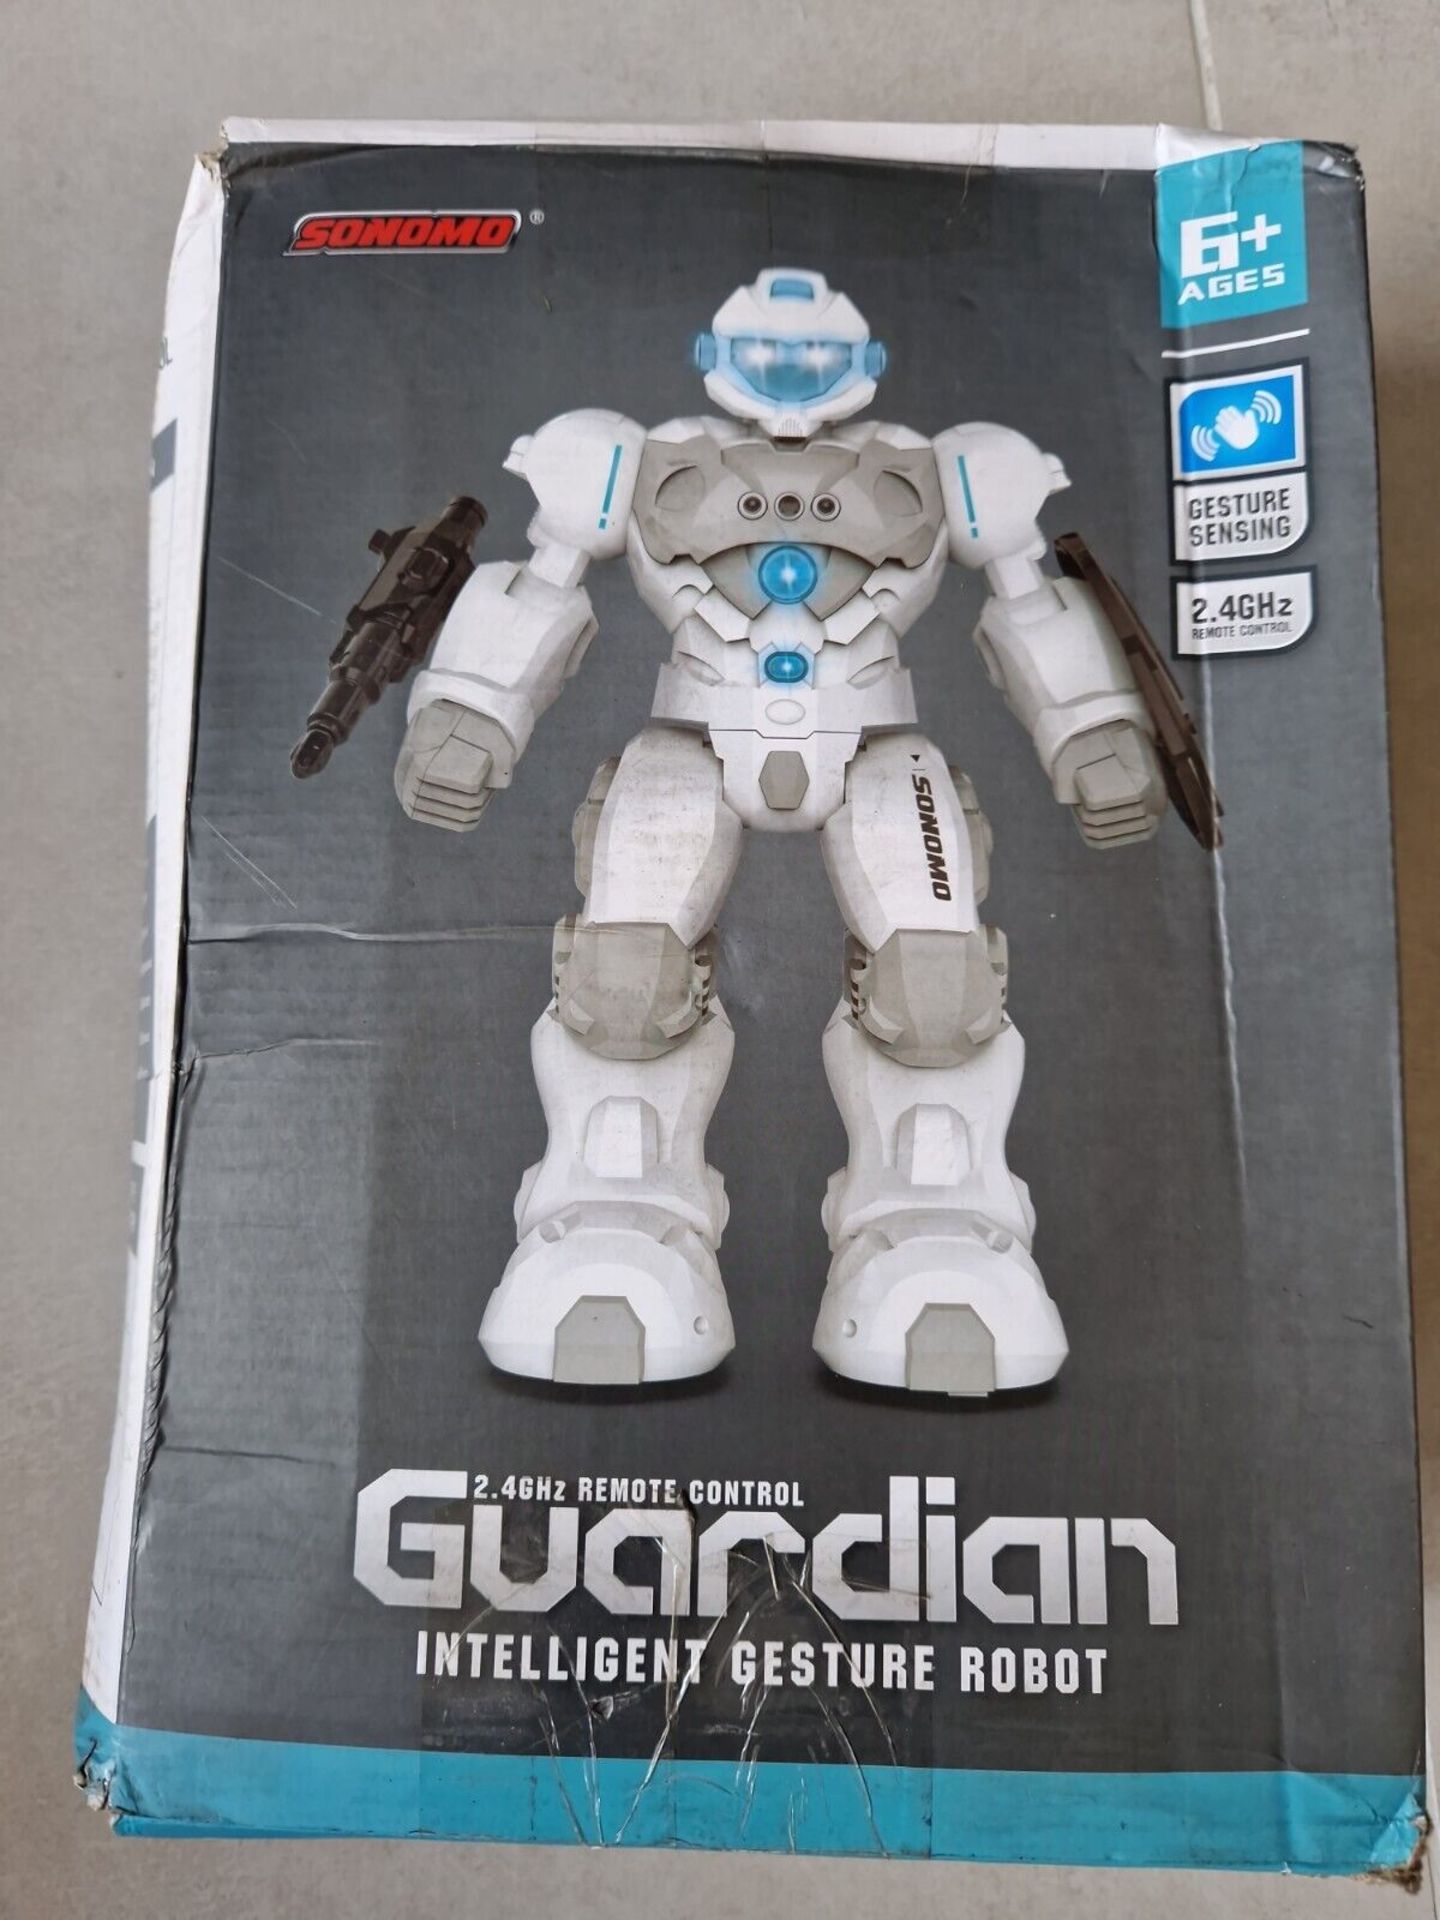 5x Sonomo Guardian Remote Control Intelligent Gesture Robot, White - RRP £200 - Image 2 of 3